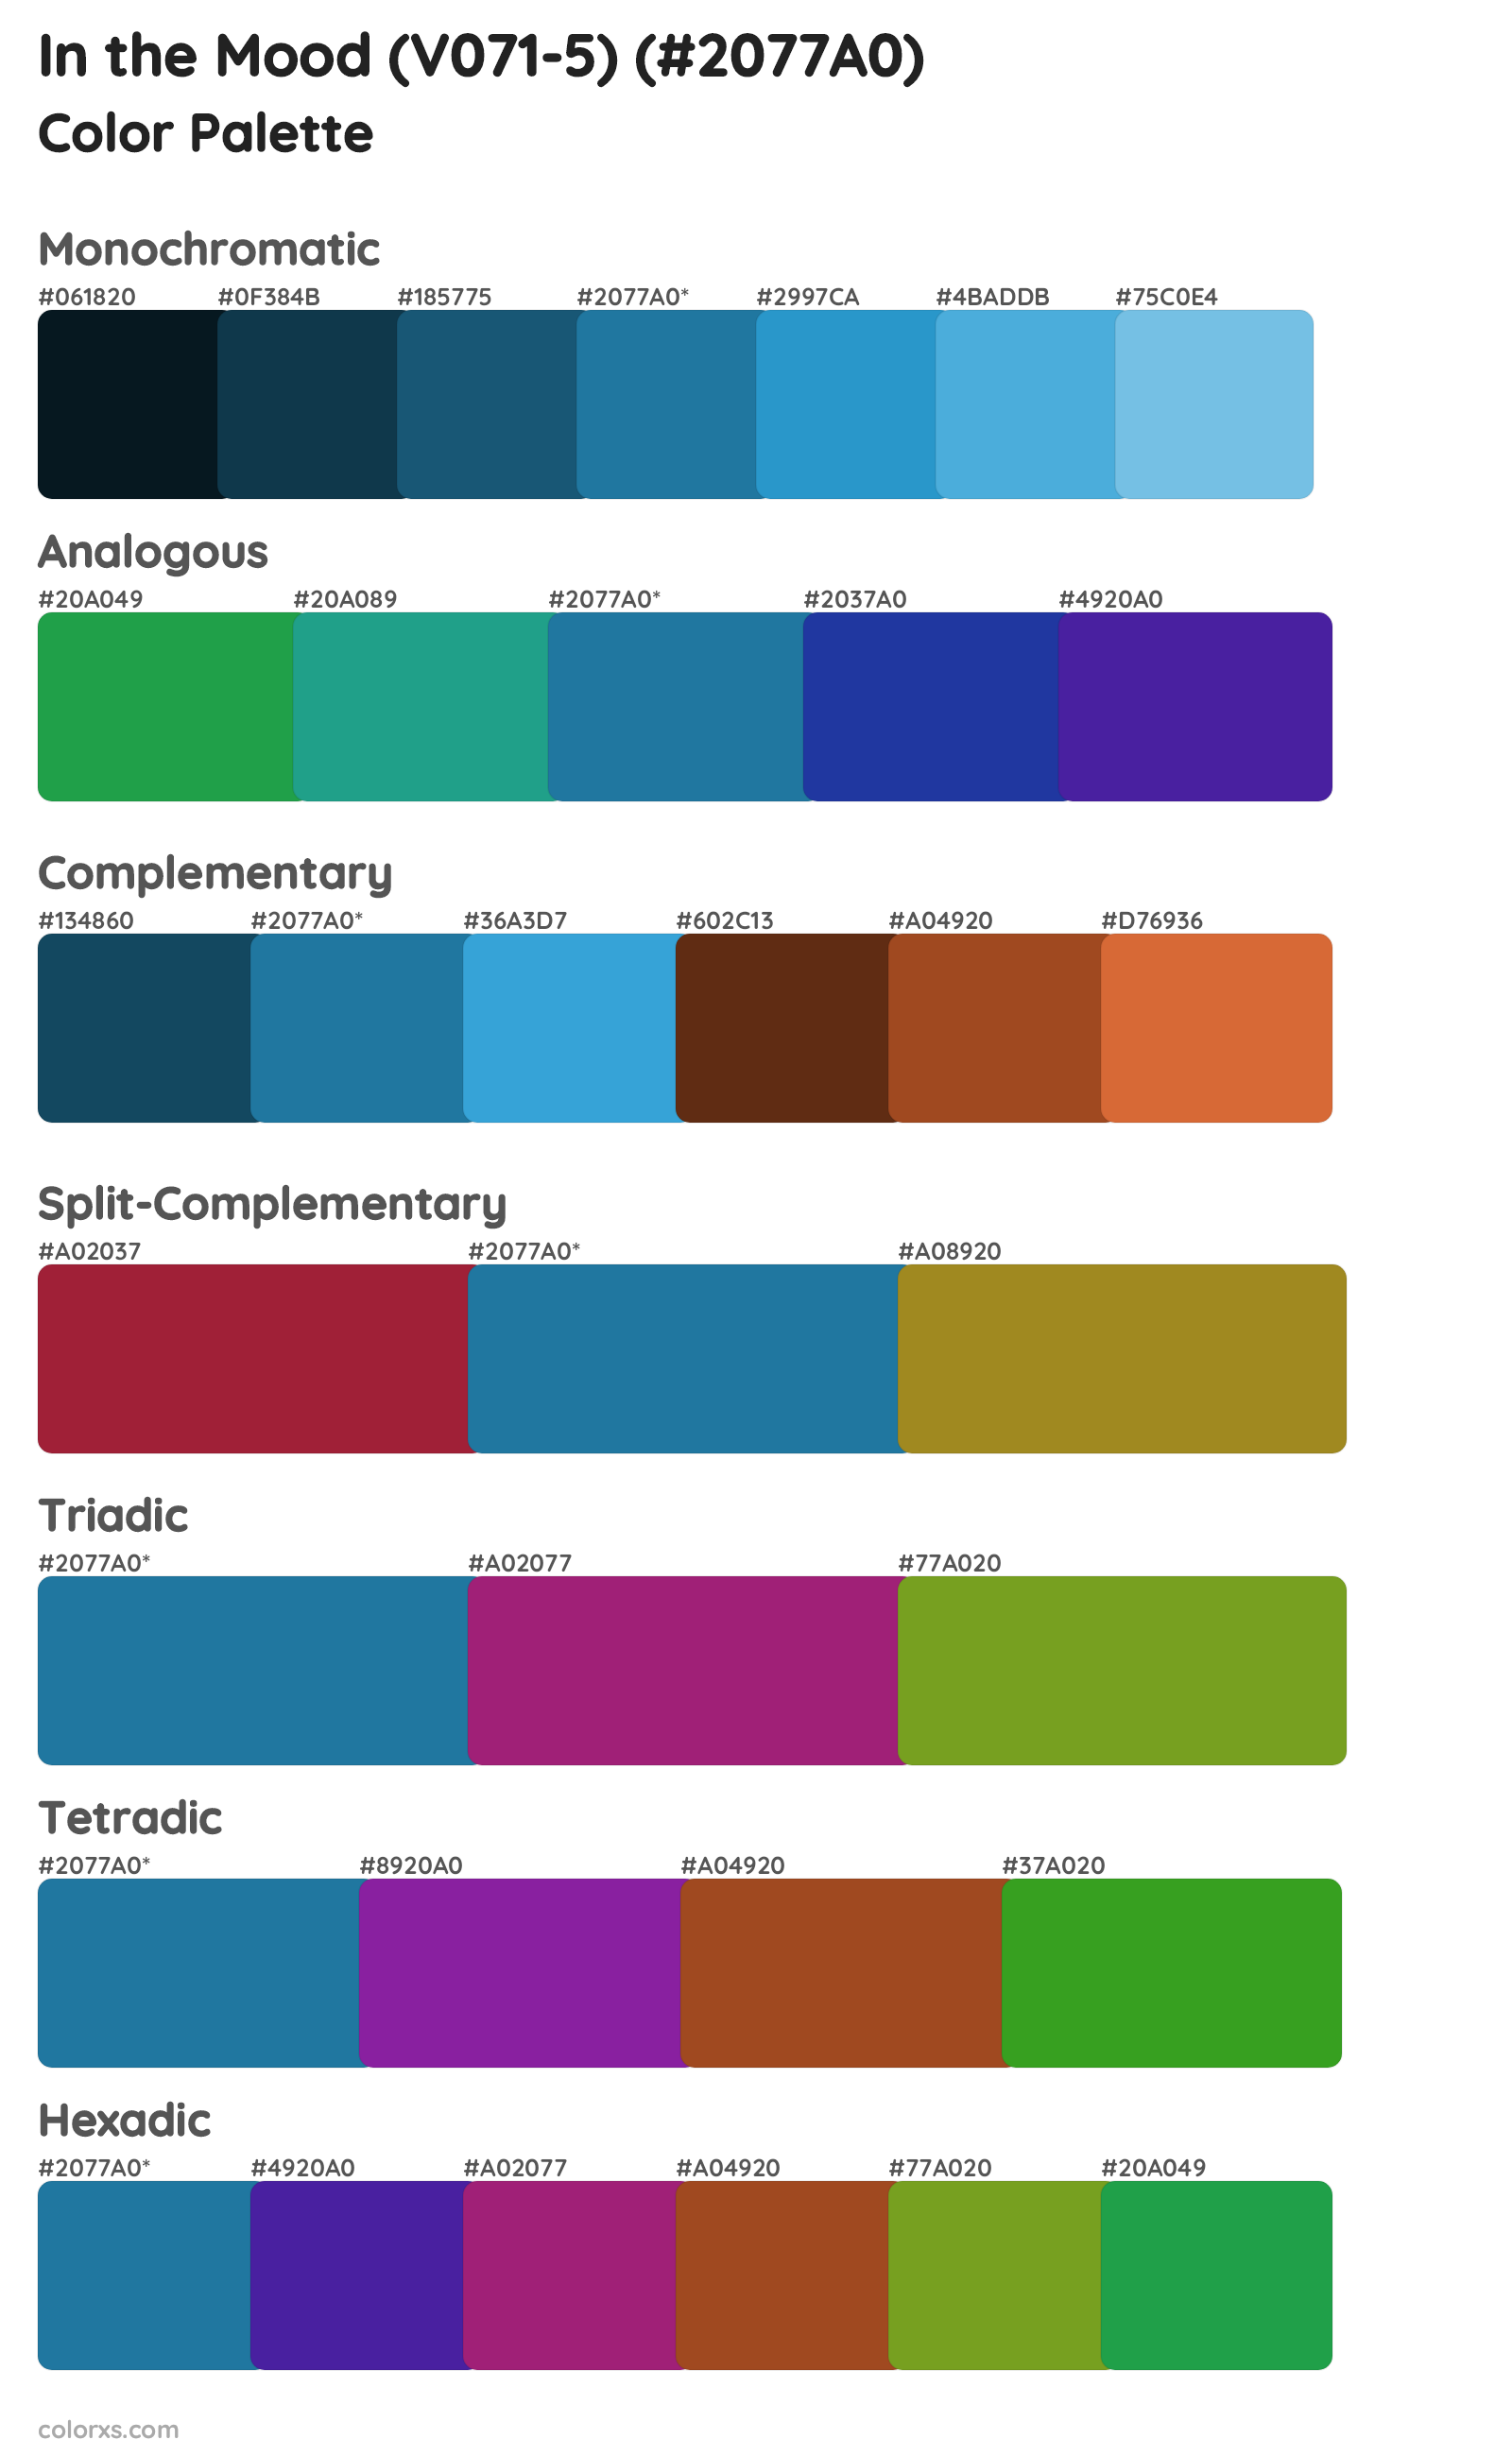 In the Mood (V071-5) Color Scheme Palettes